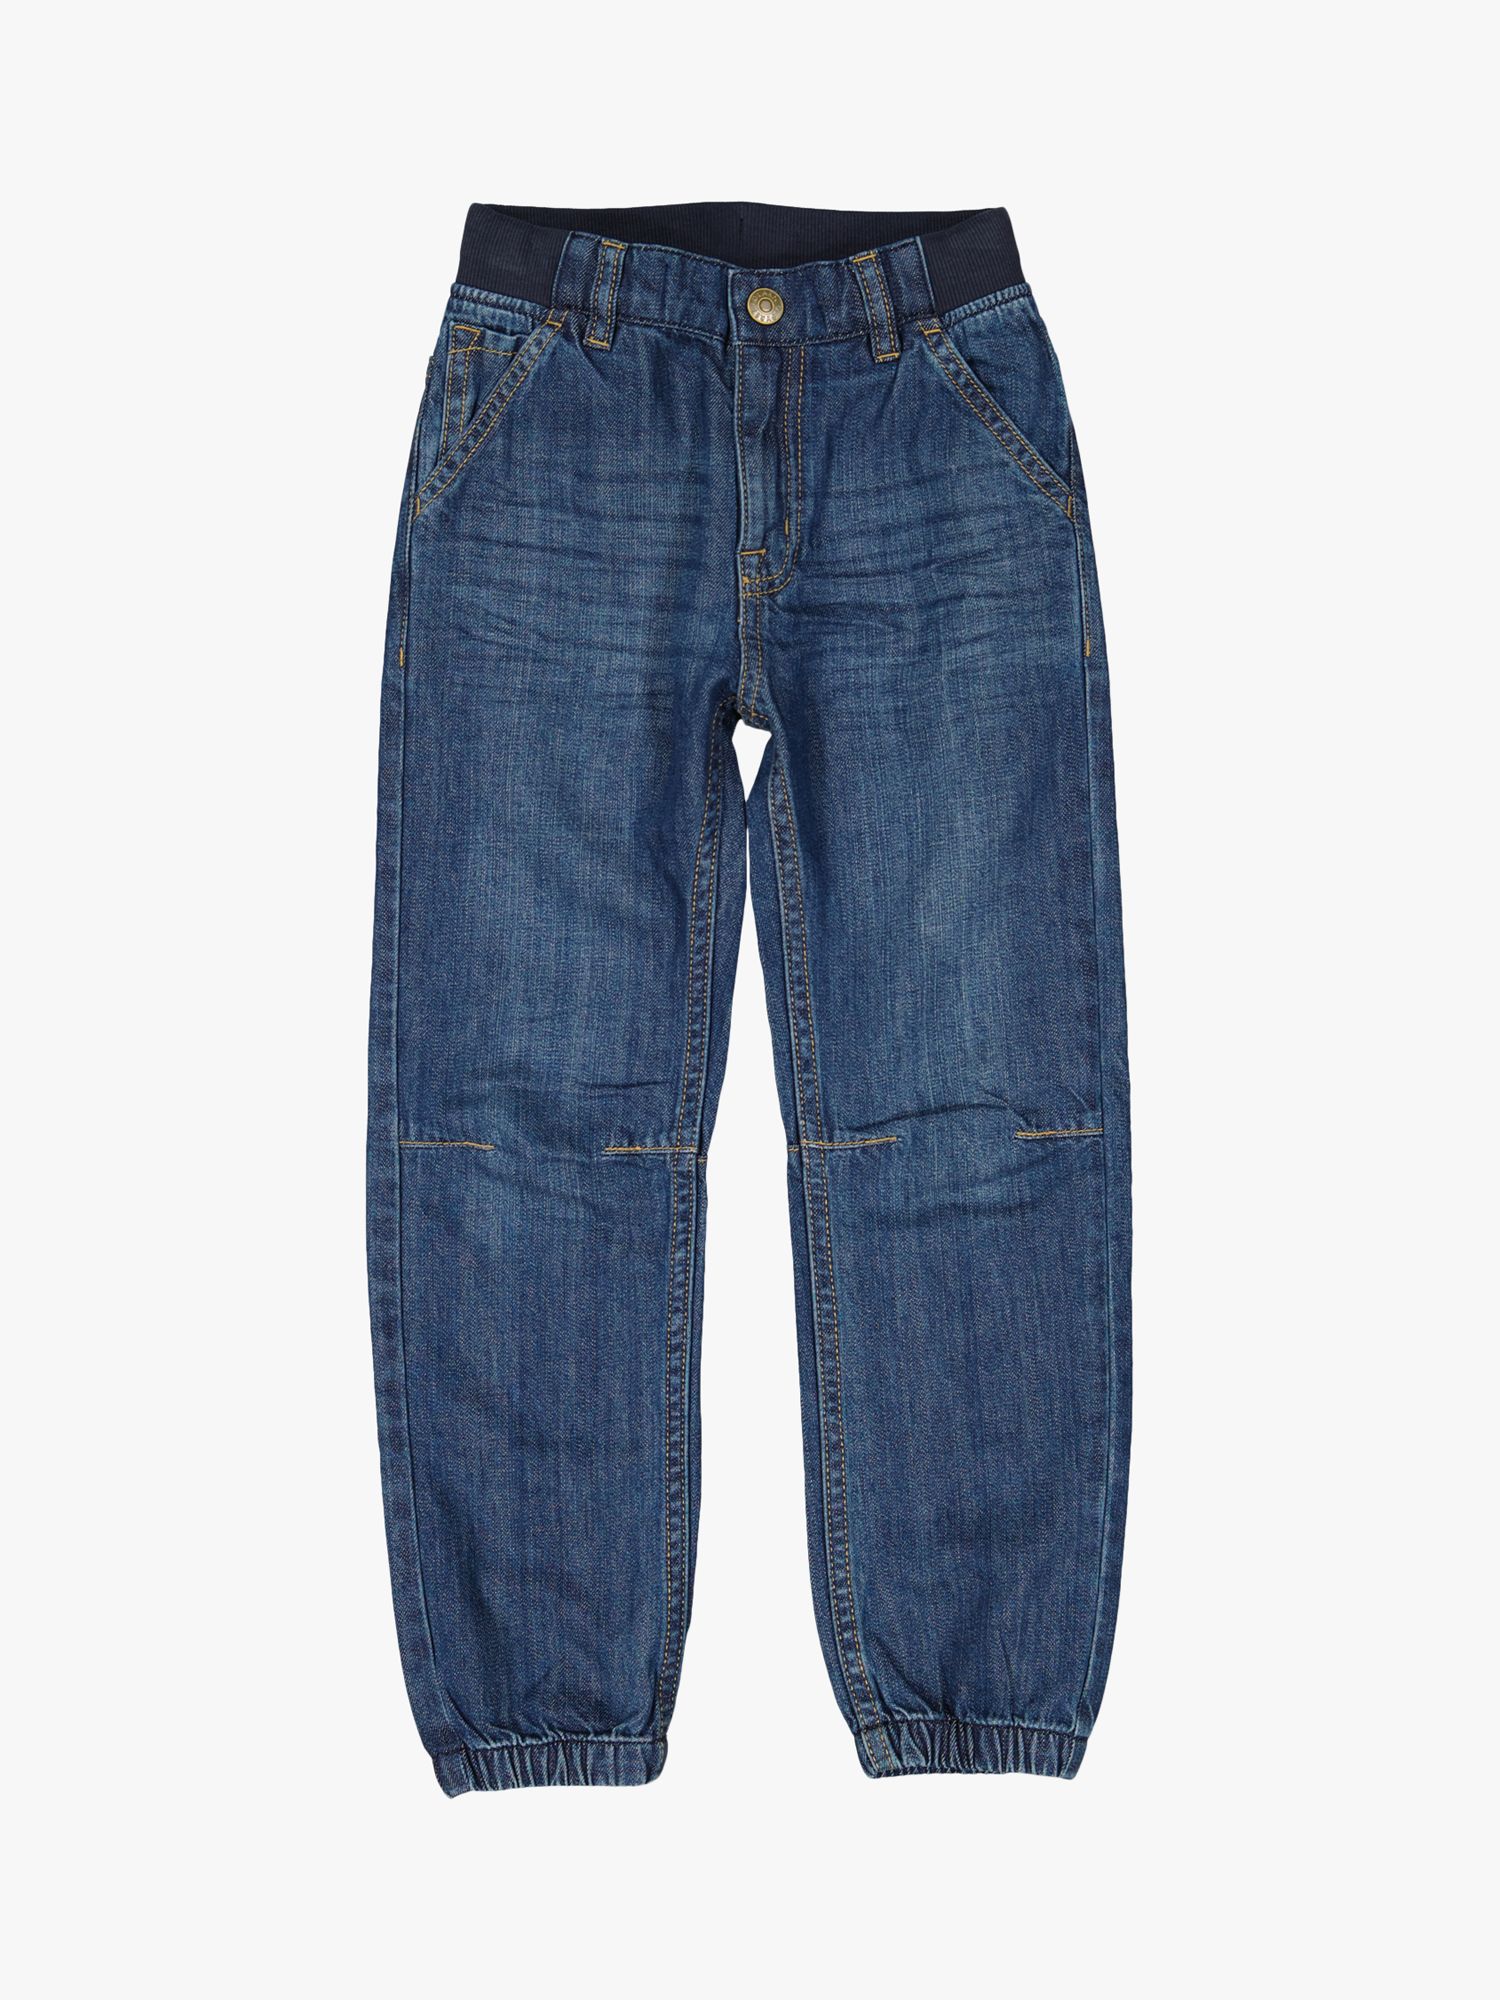 Buy Polarn O. Pyret Baby Loose Jogger Denim Jeans, Blue Online at johnlewis.com